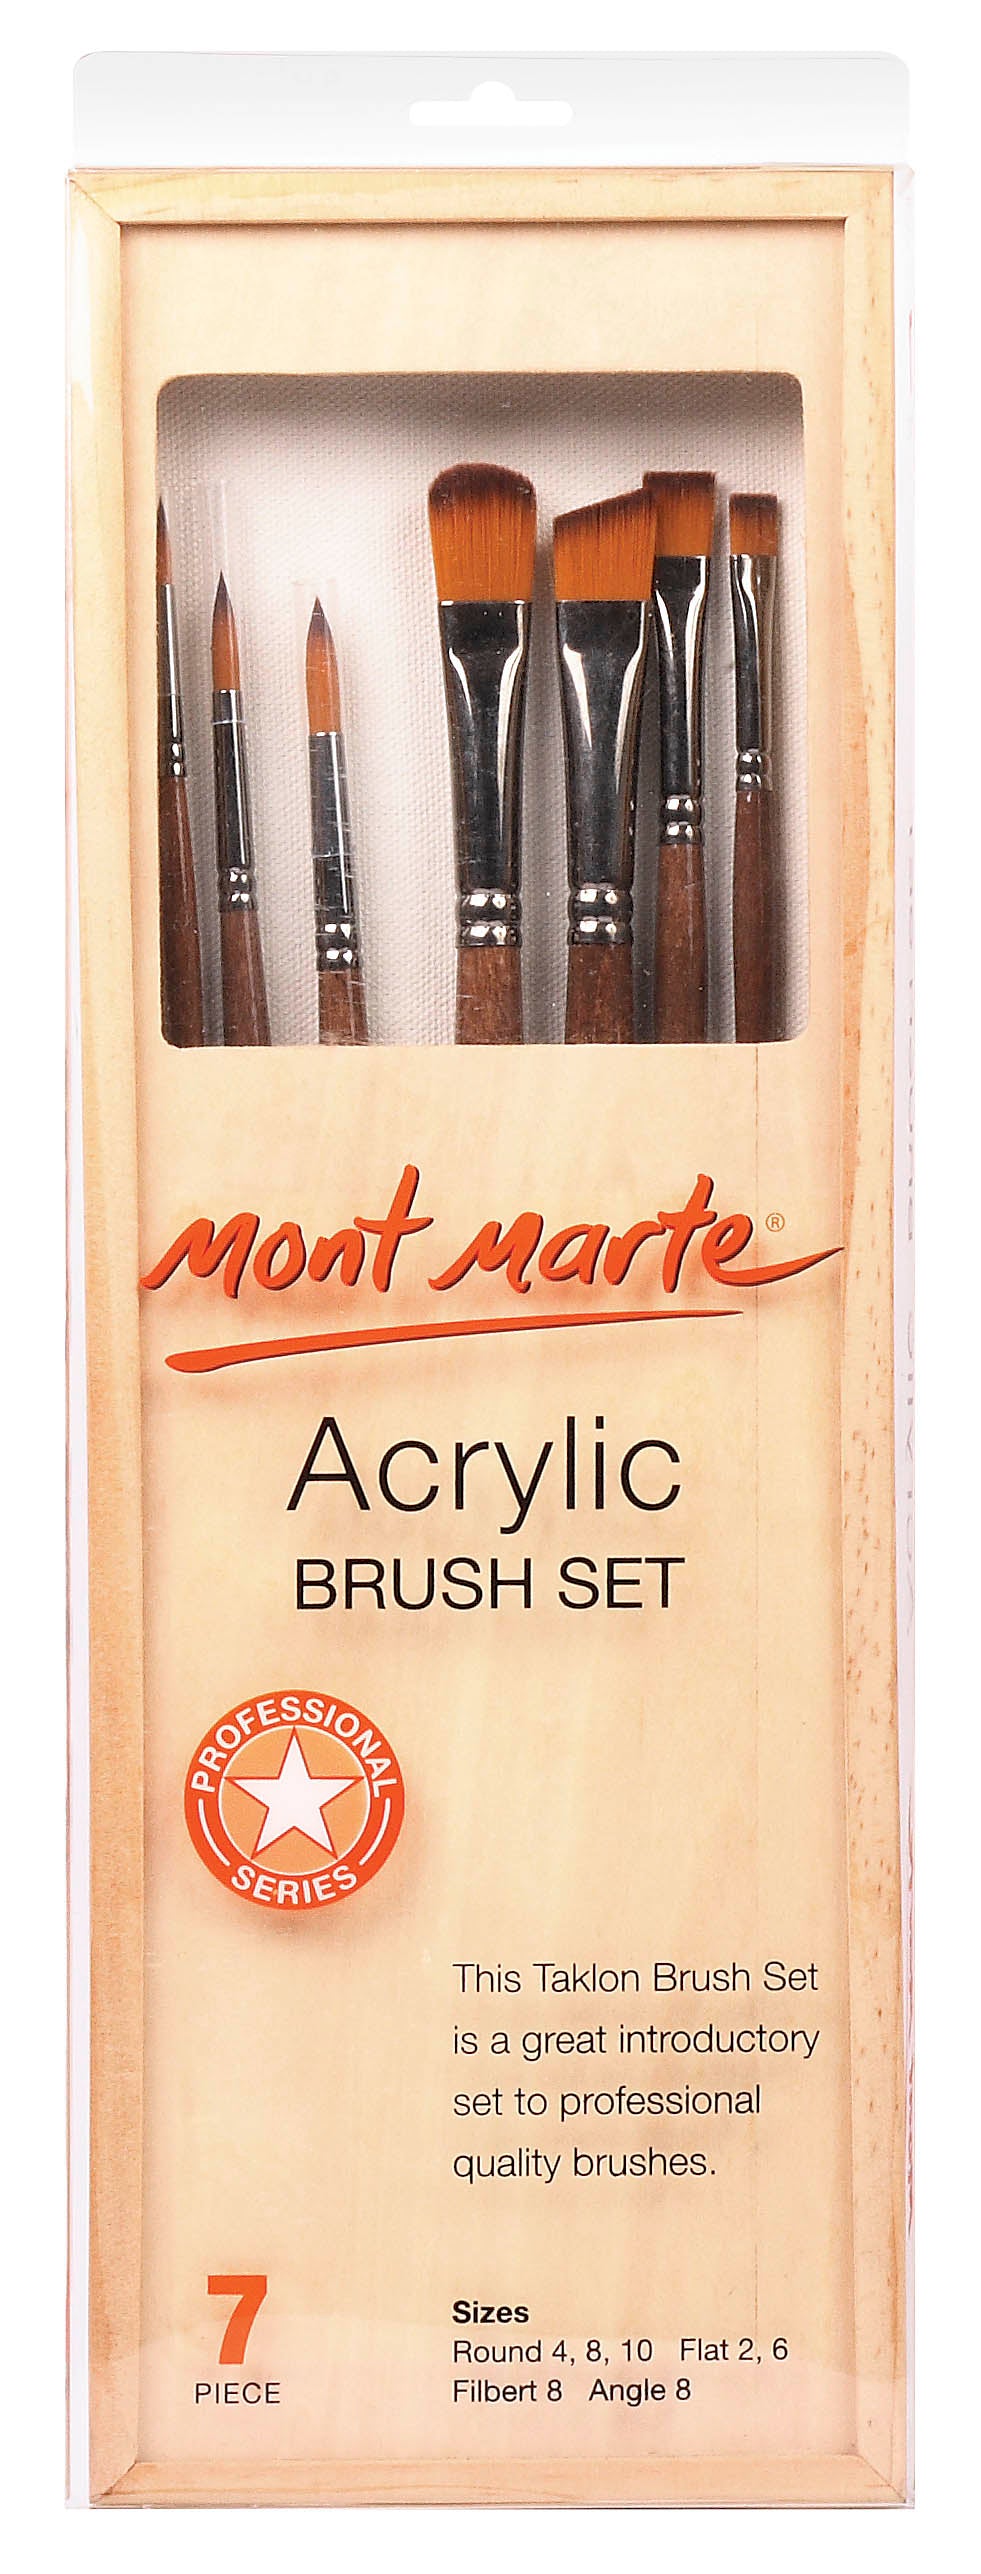 Monte Marte Acrylic Brush Set in box 7pc